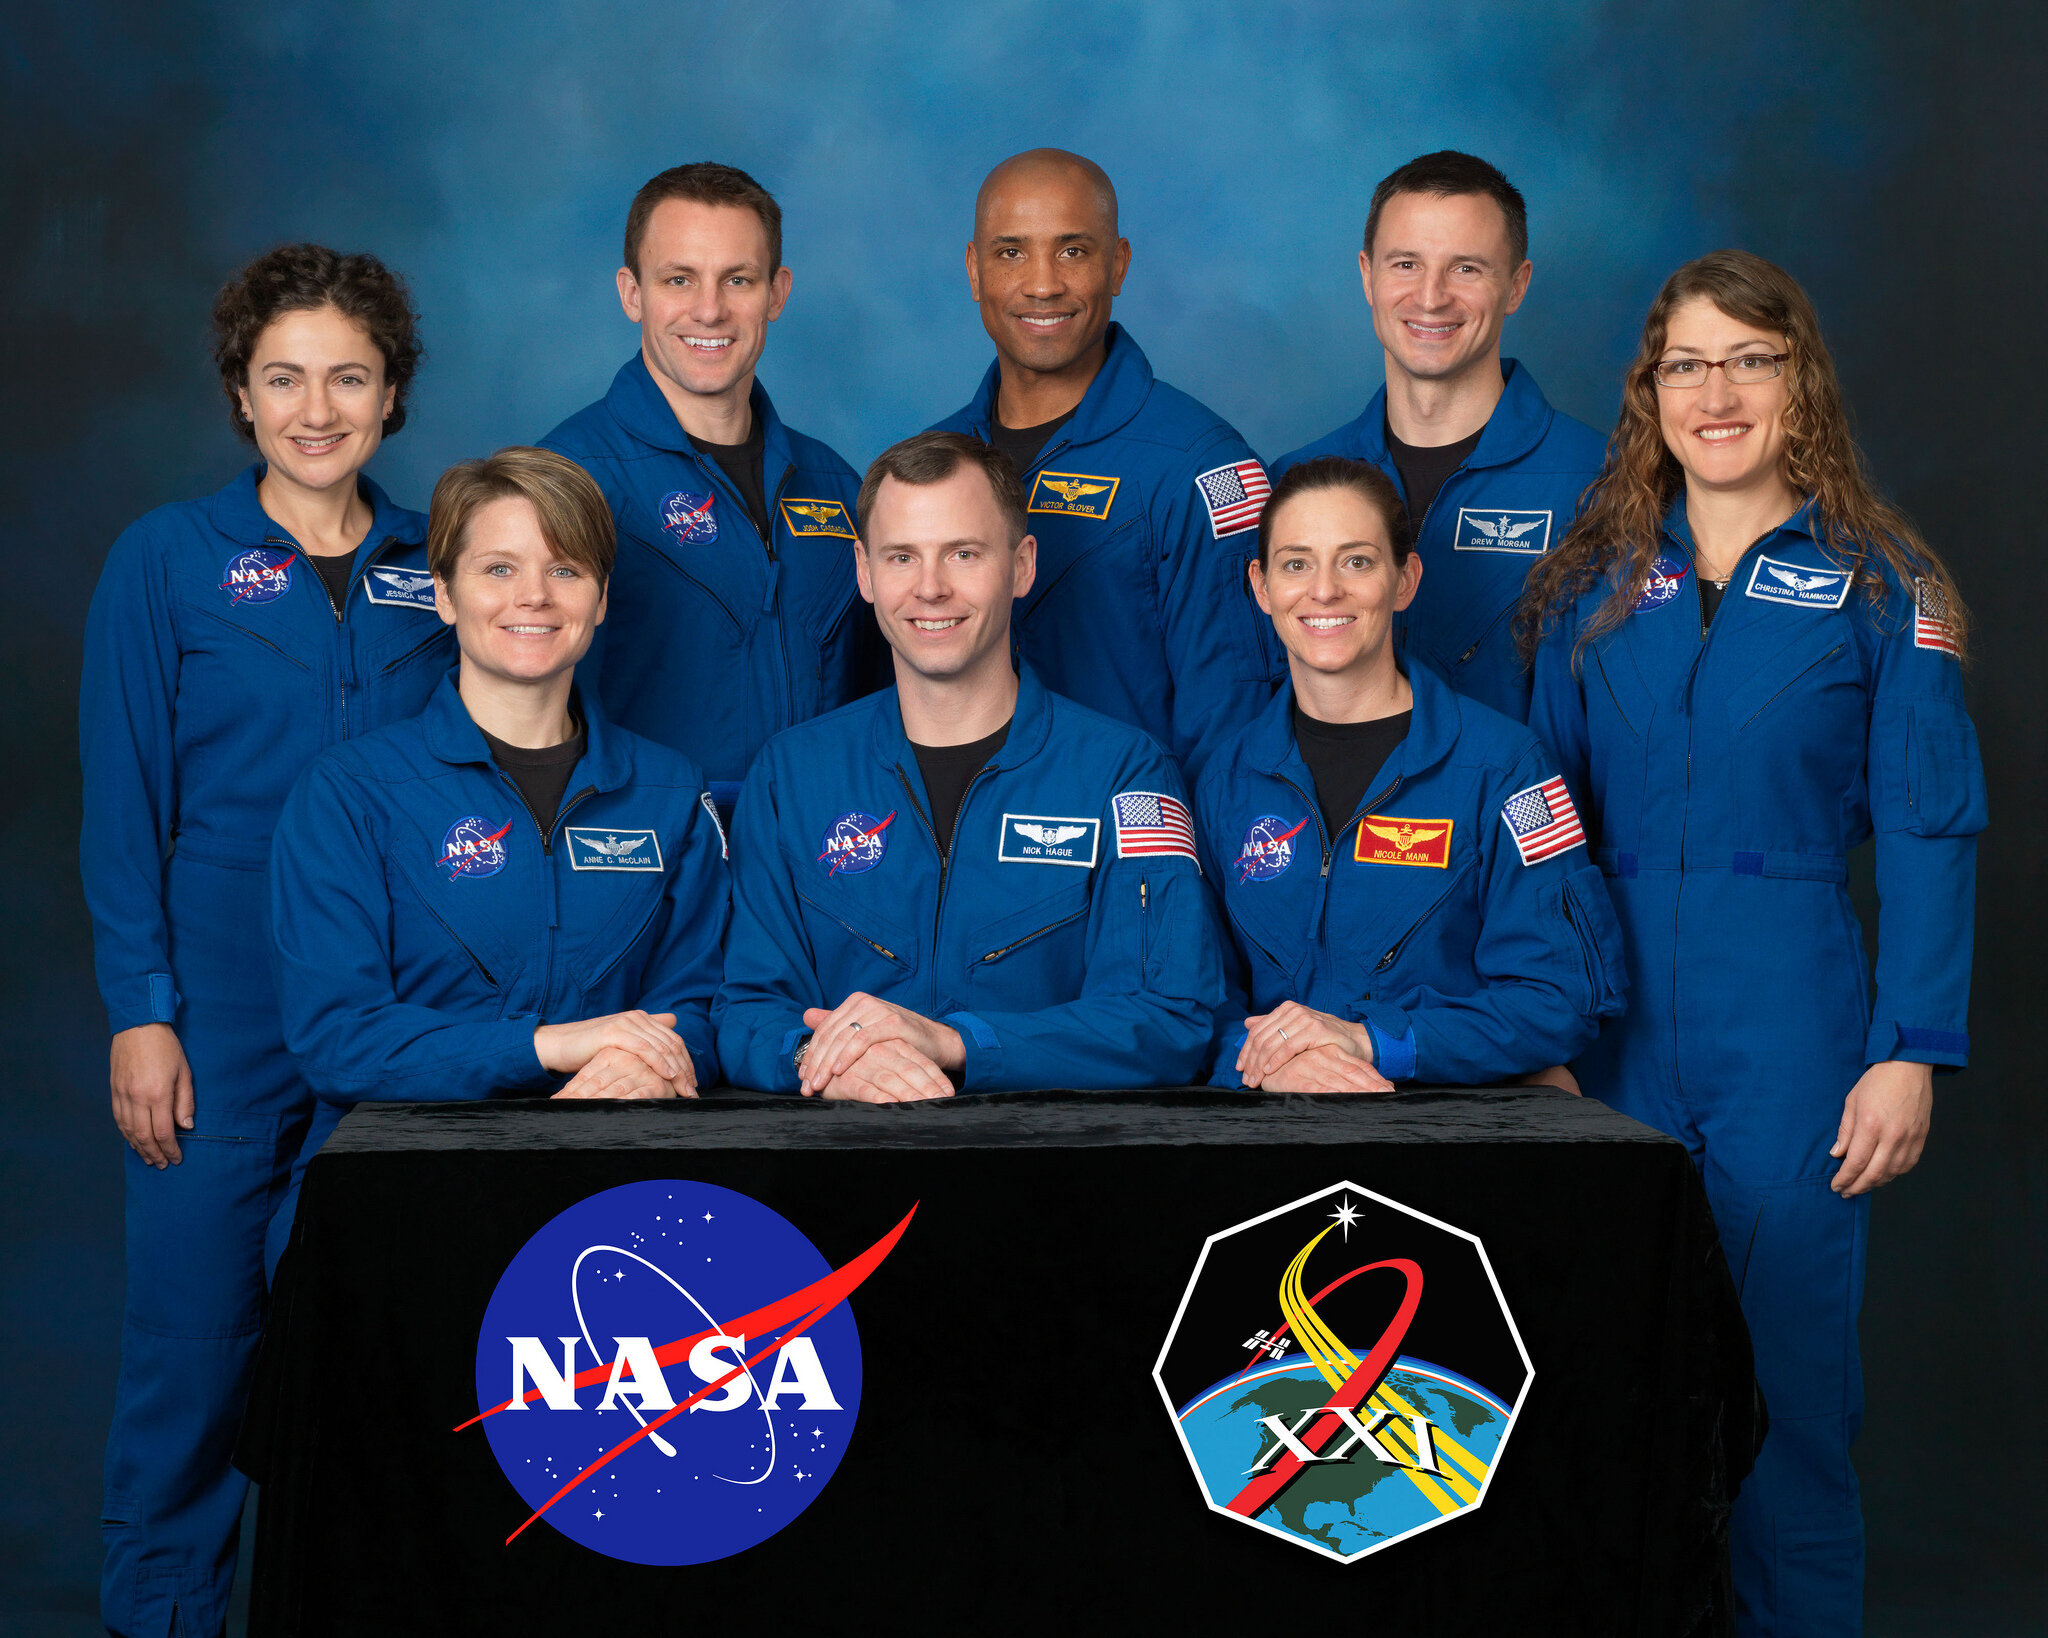  The 2013 class of NASA astronauts: (front row, from left) Anne McClain, Nick Hague, Nicole Aunapu Mann; (back row) Jessica Meir, Josh Cassada, Victor Glover, Andrew Morgan, Christina Hammock. Photo courtesy of NASA 